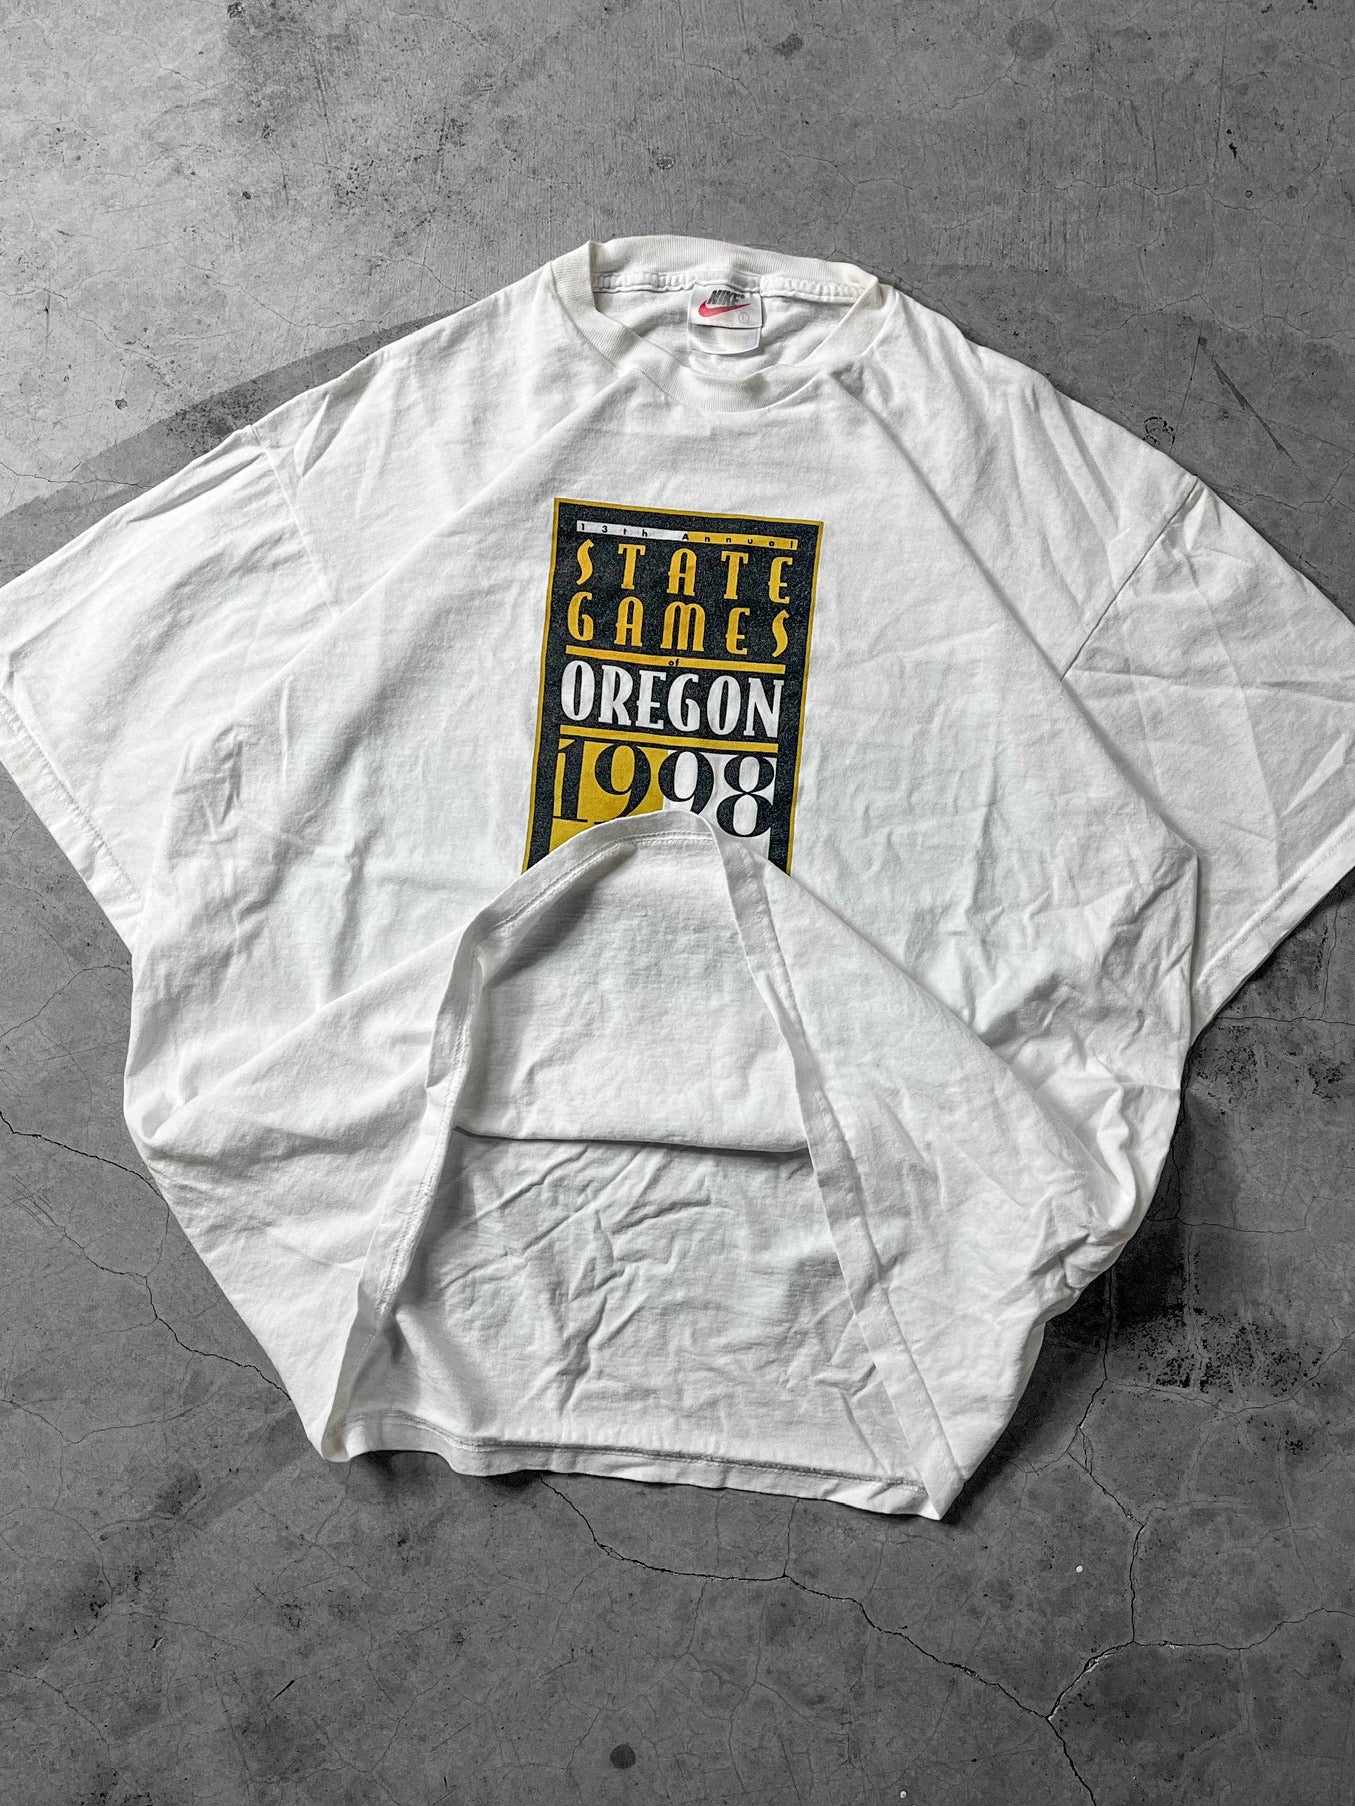 1998 Nike Oregon State Games Shirt - L